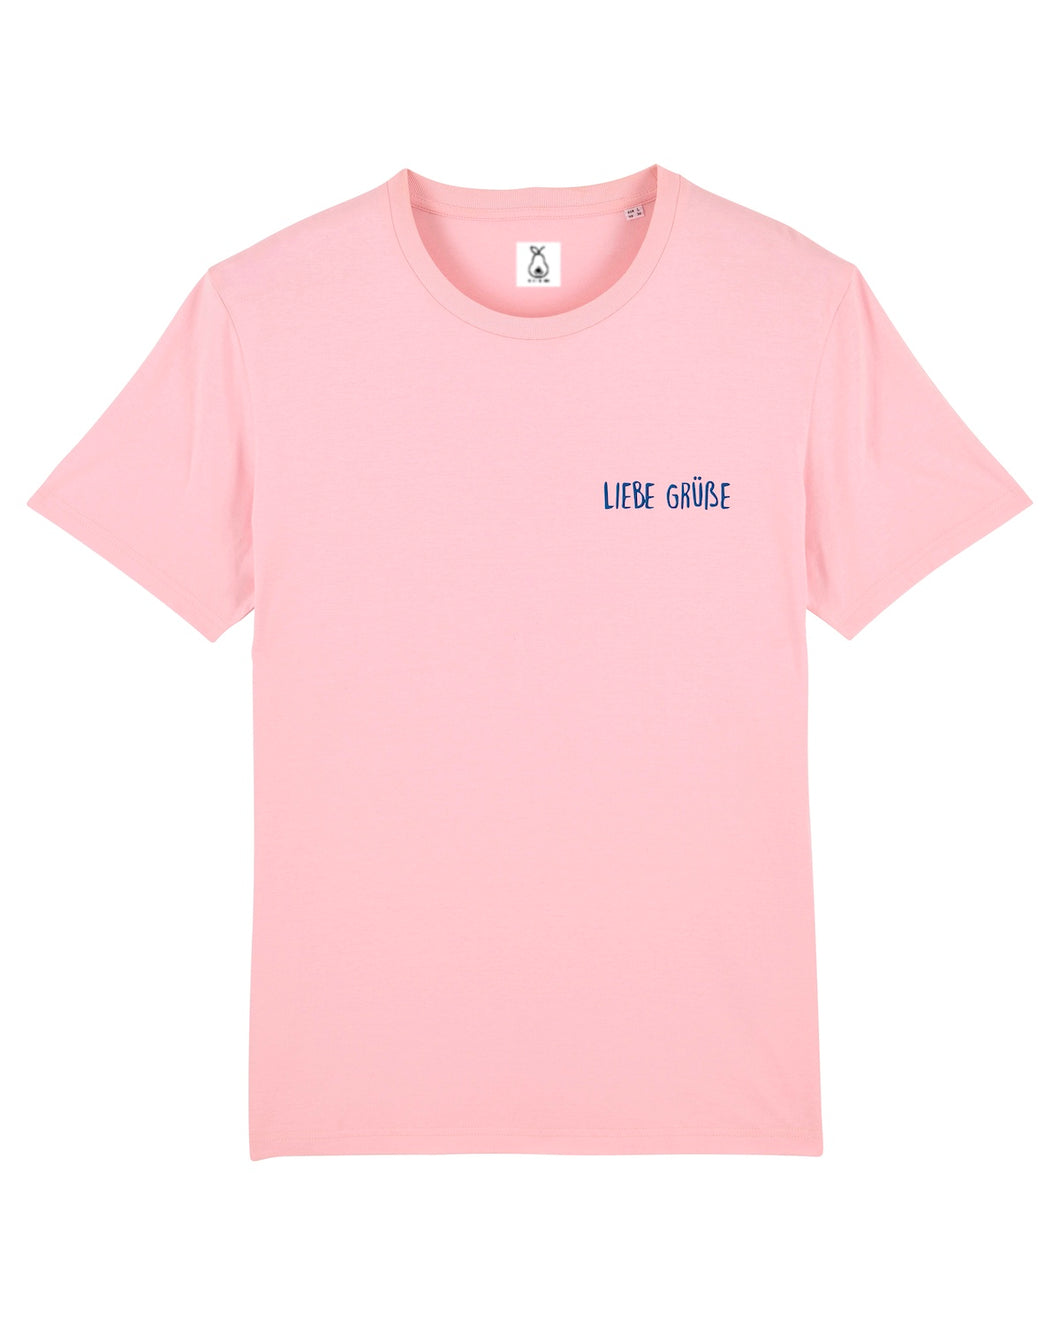 Liebe Grüße - T-Shirt - Pink